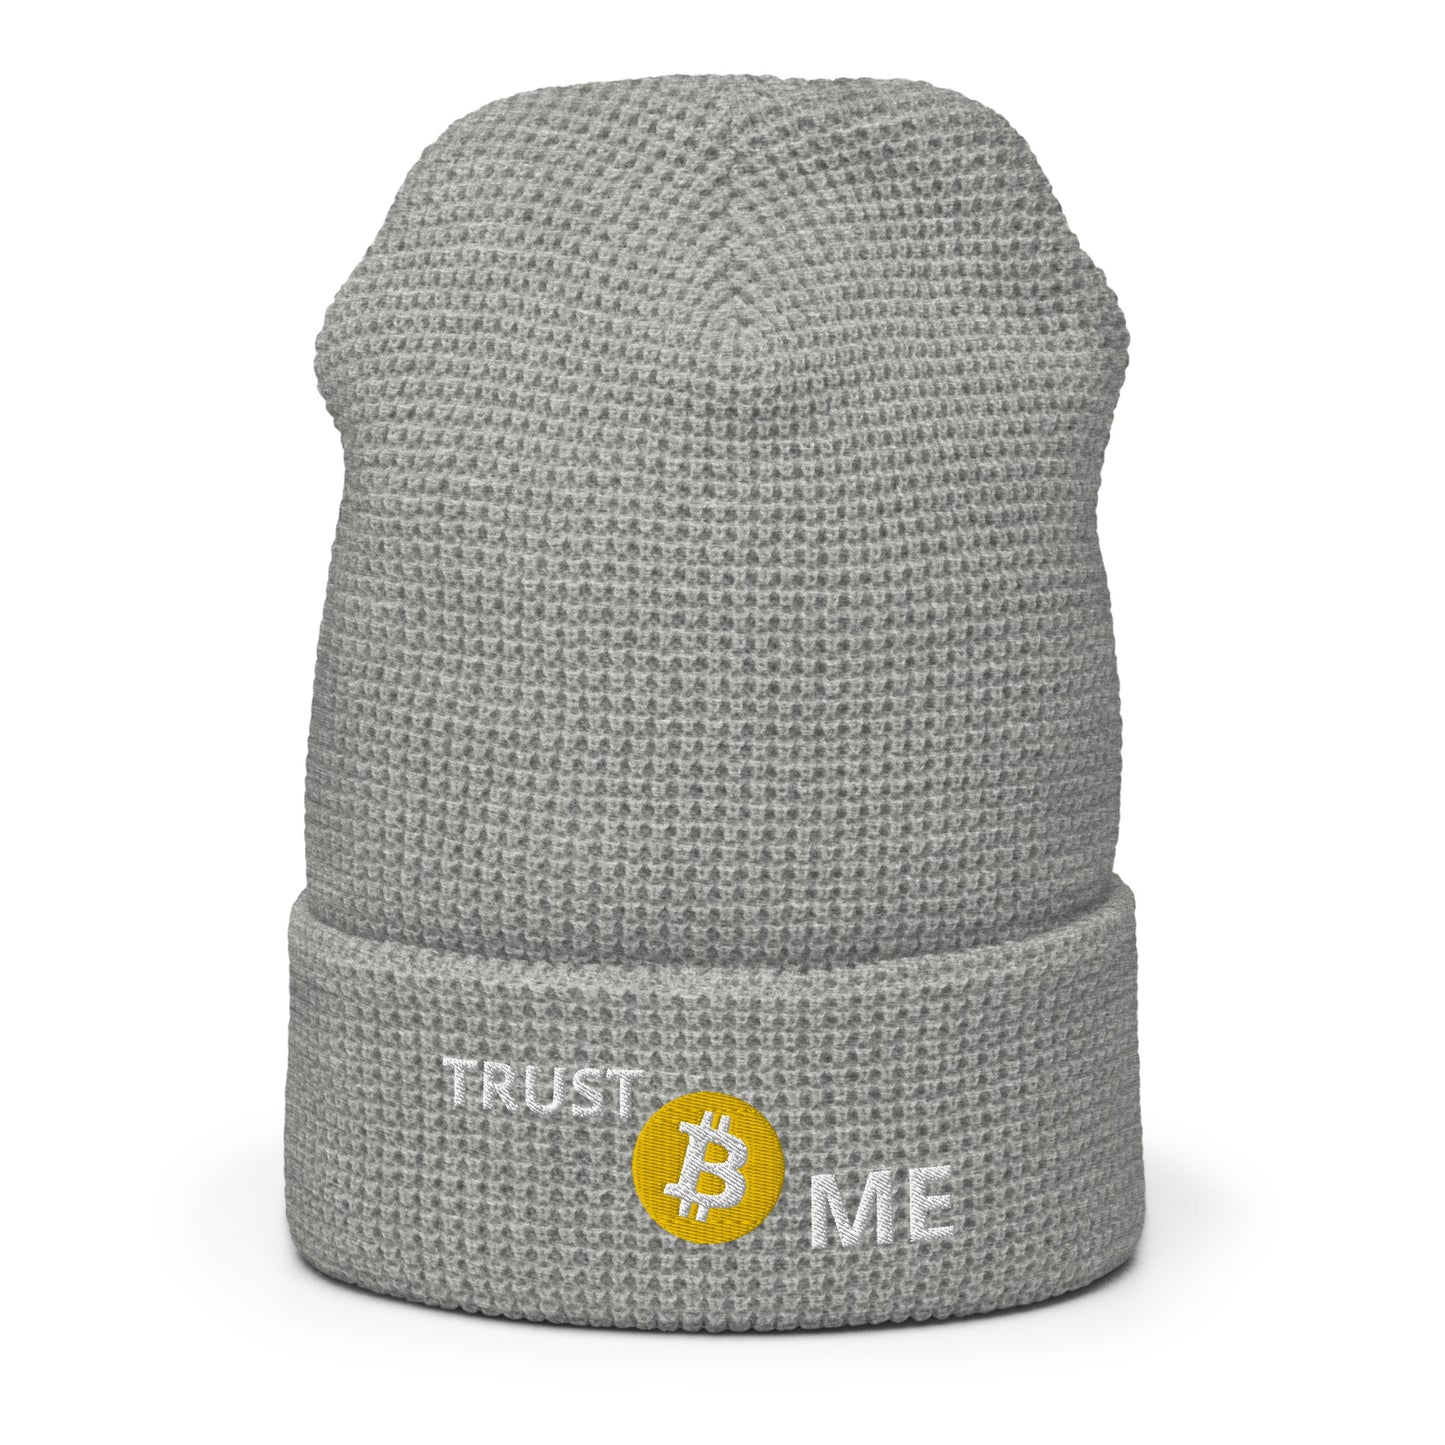 Bitcoin Hat Trust Me